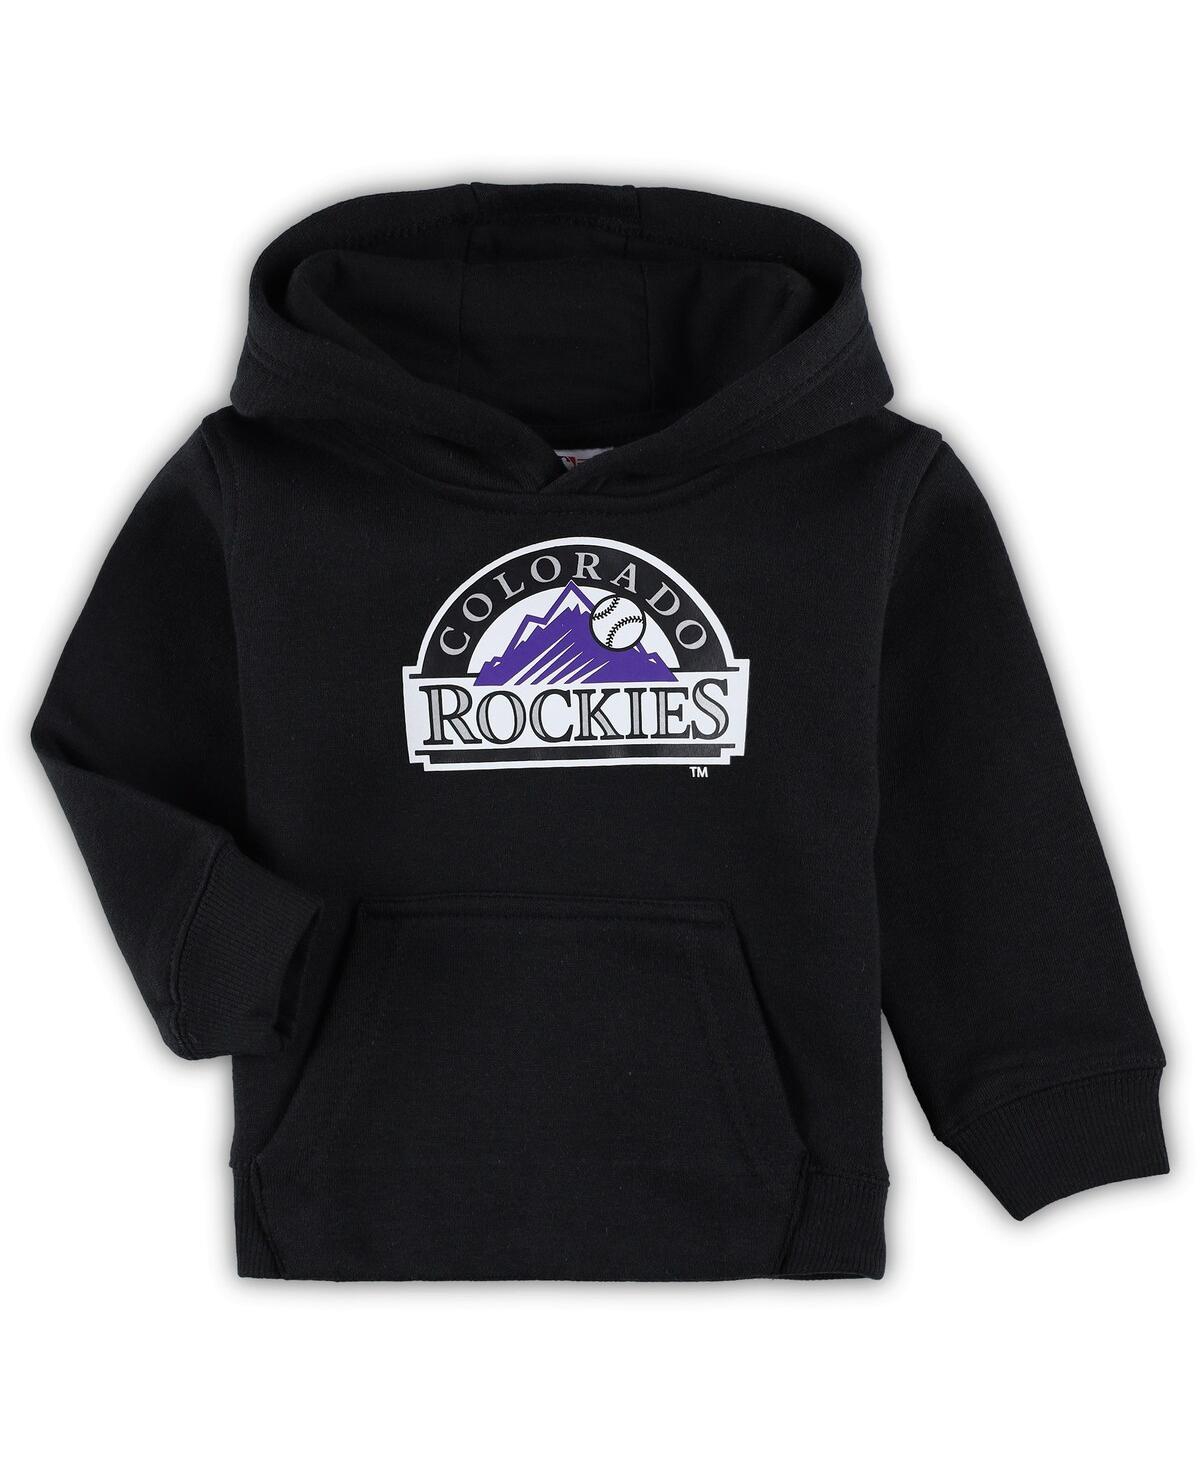 Outerstuff Babies' Toddler Boys And Girls Black Colorado Rockies Team Primary Logo Fleece Pullover Hoodie